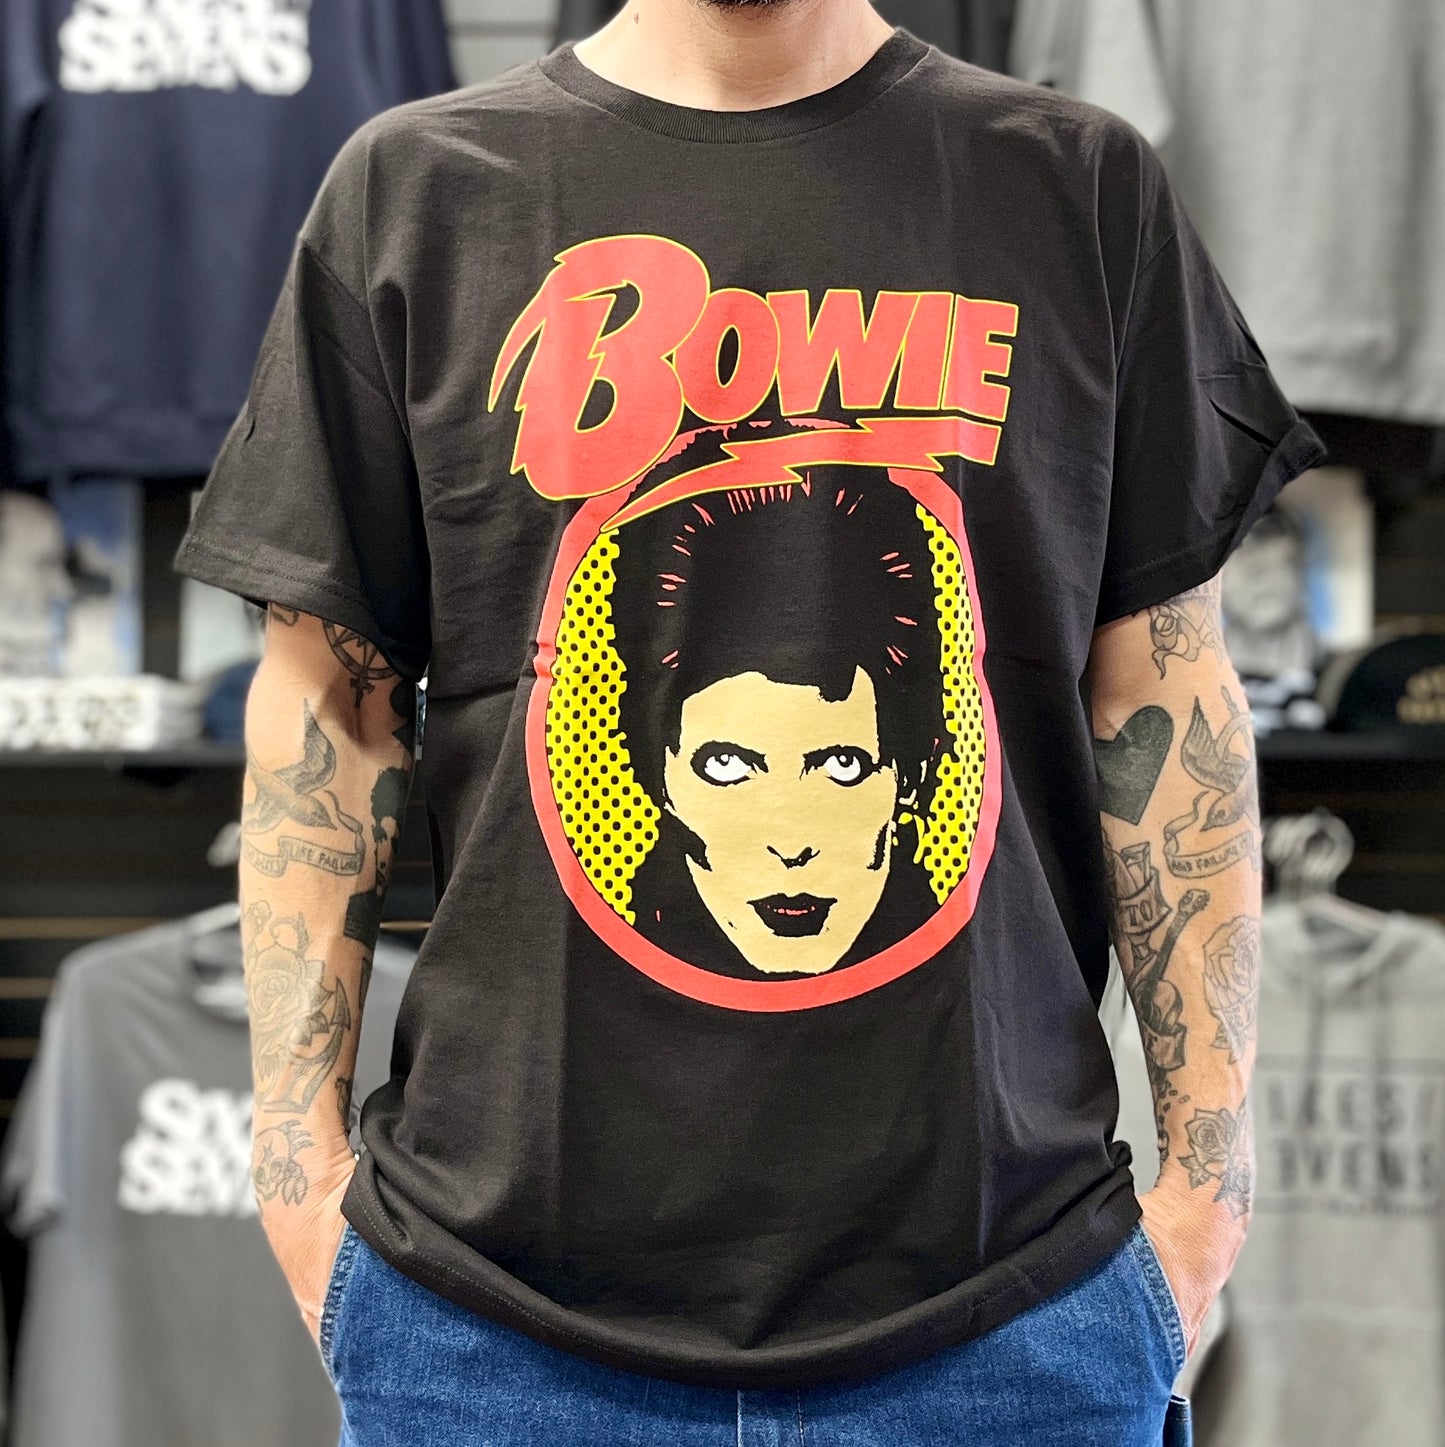 David Bowie T-Shirt - Retro Poster